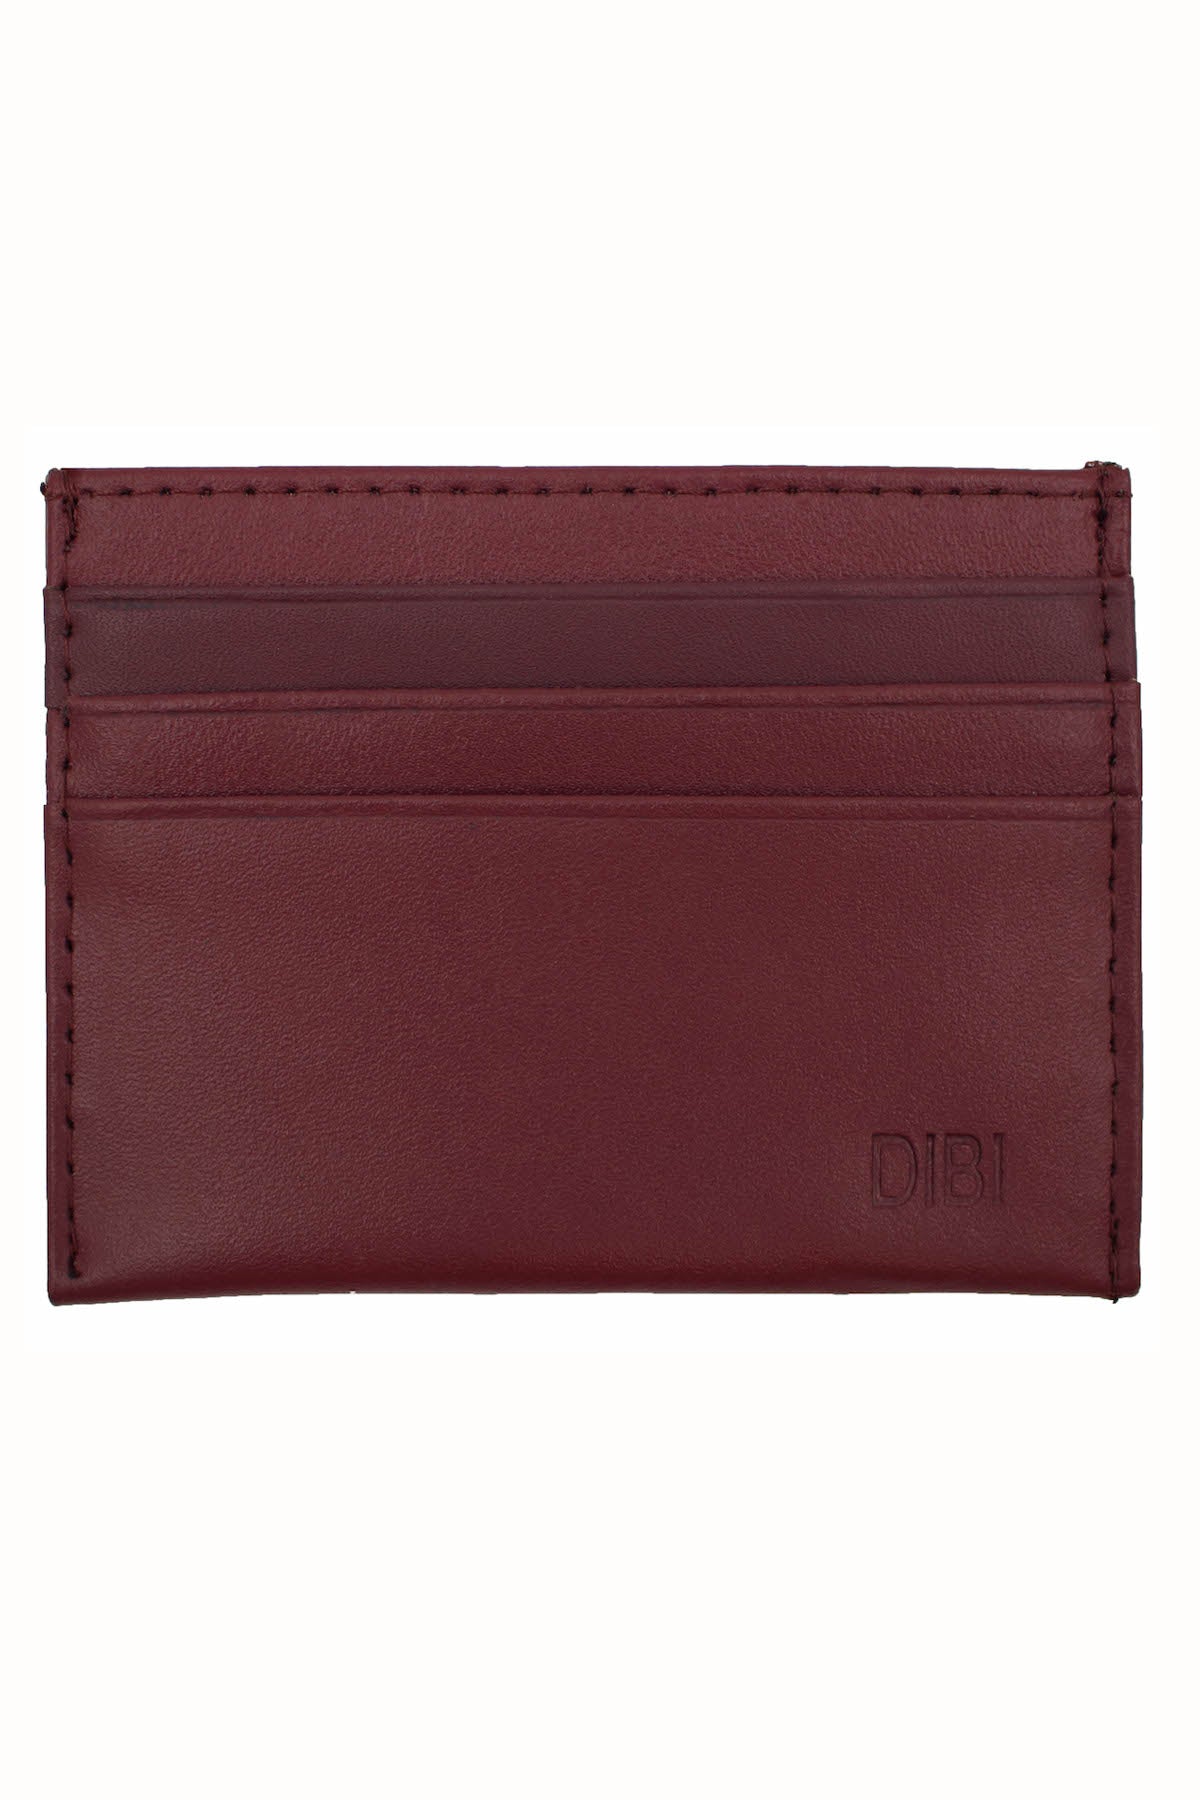 DIBI Plum Slim Leather Wallet